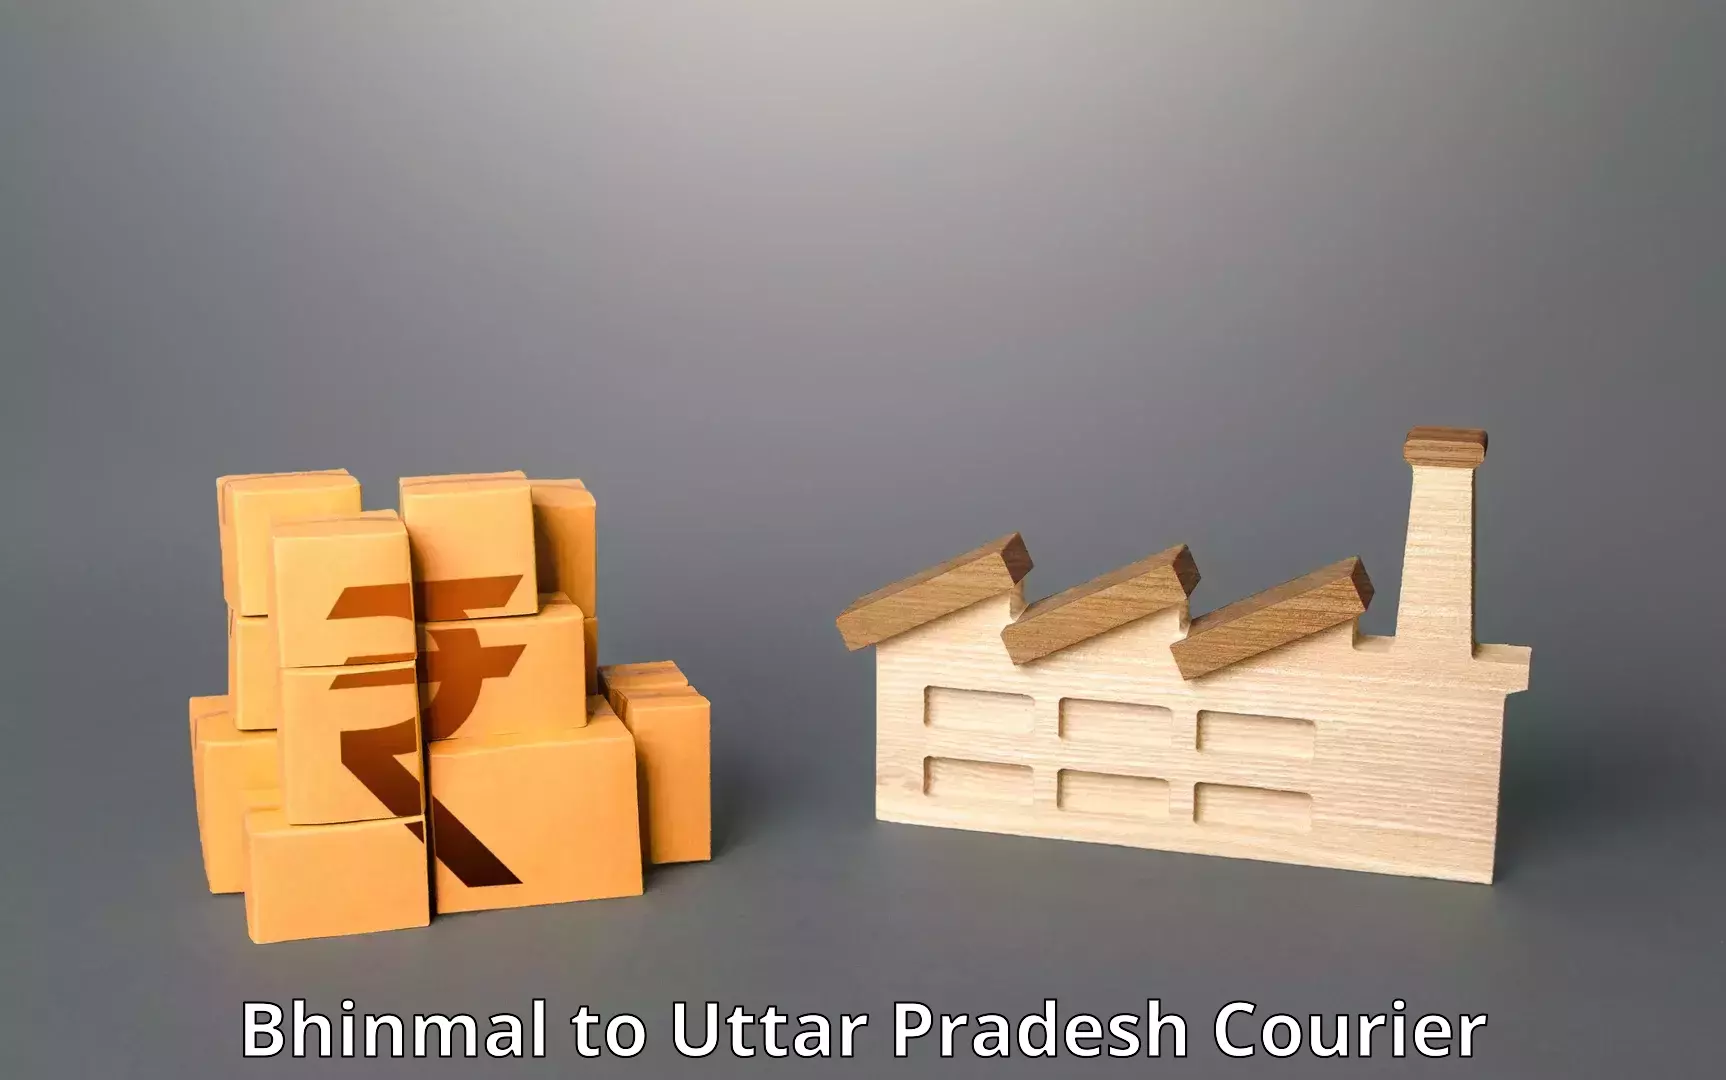 Courier service comparison Bhinmal to Uttar Pradesh